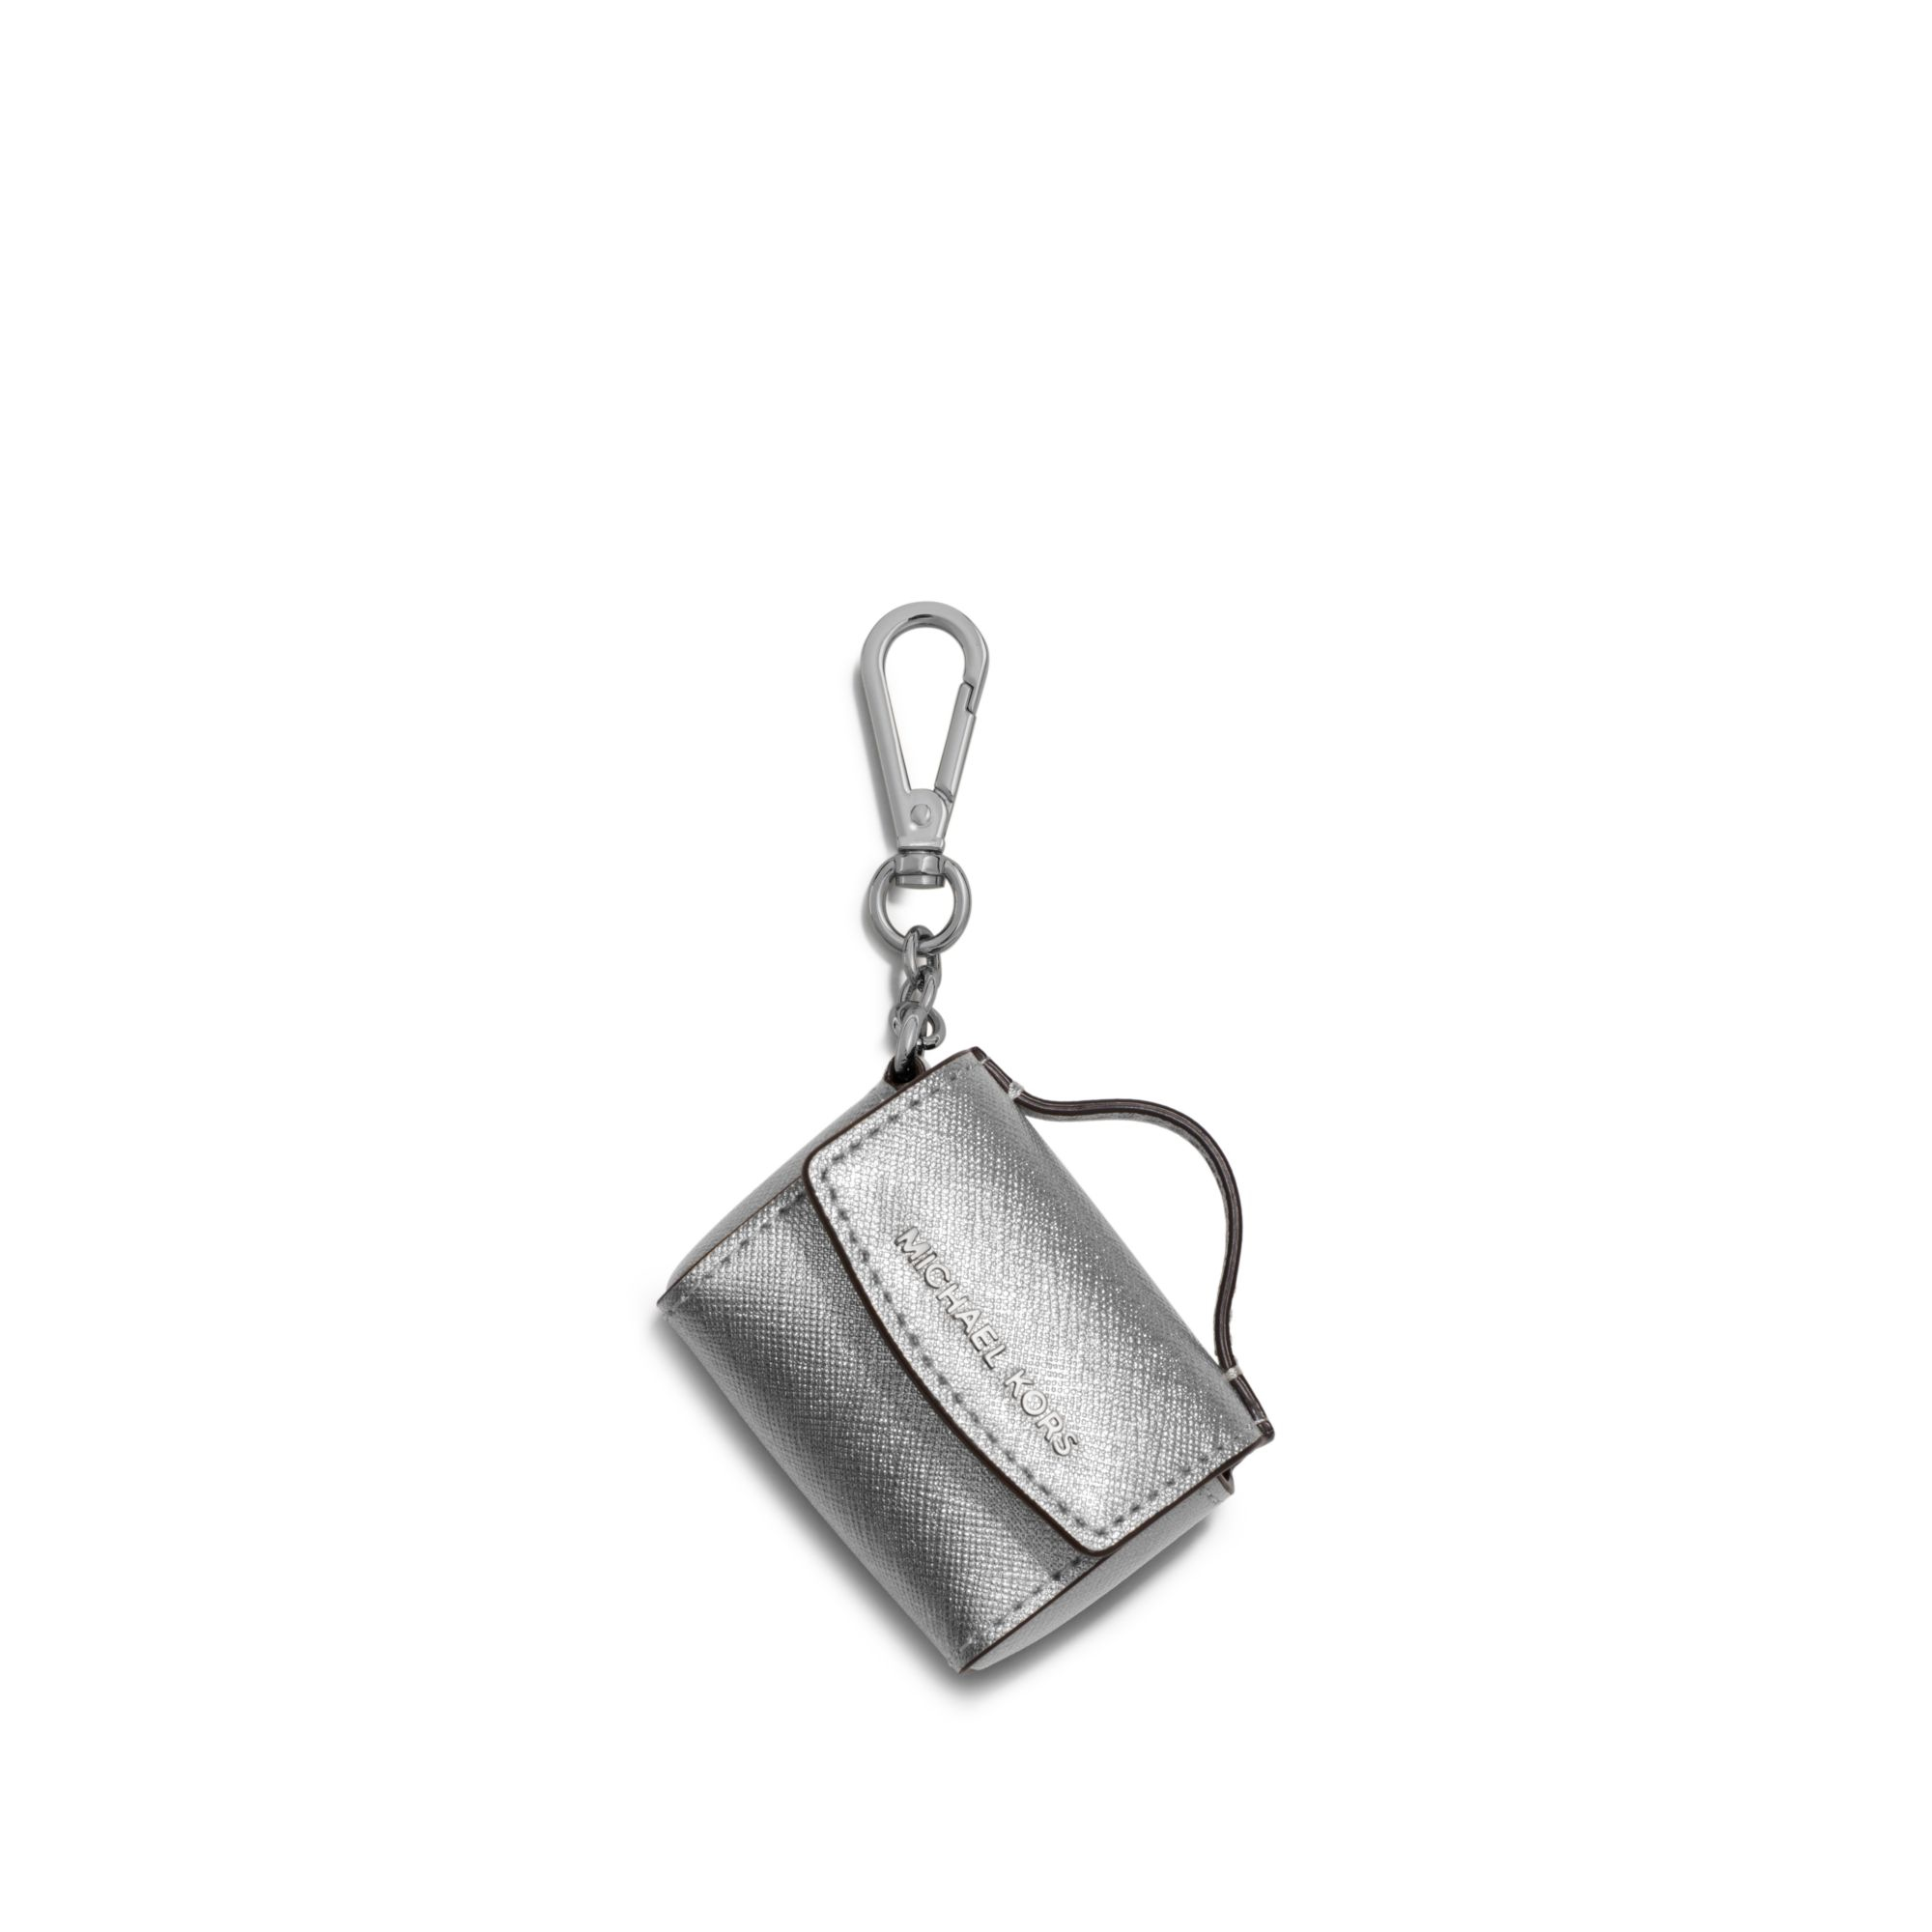 Michael Kors Ava Metallic Leather Coin Purse Key Chain - Lyst